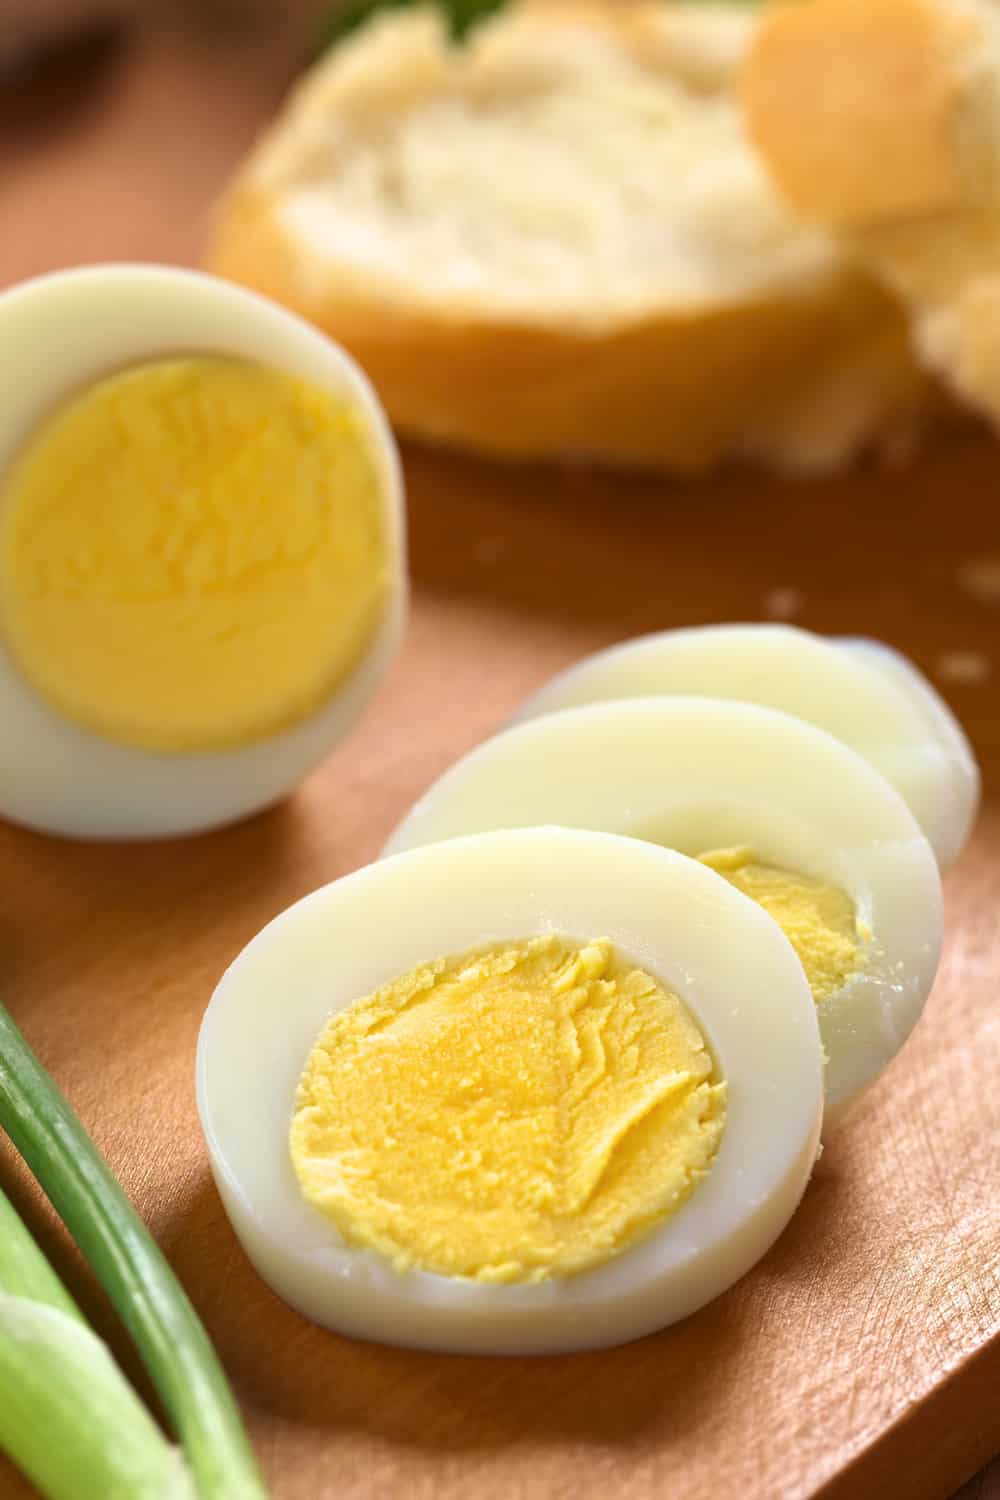 Do HardBoiled Eggs Go Bad? How Long Does It Last?